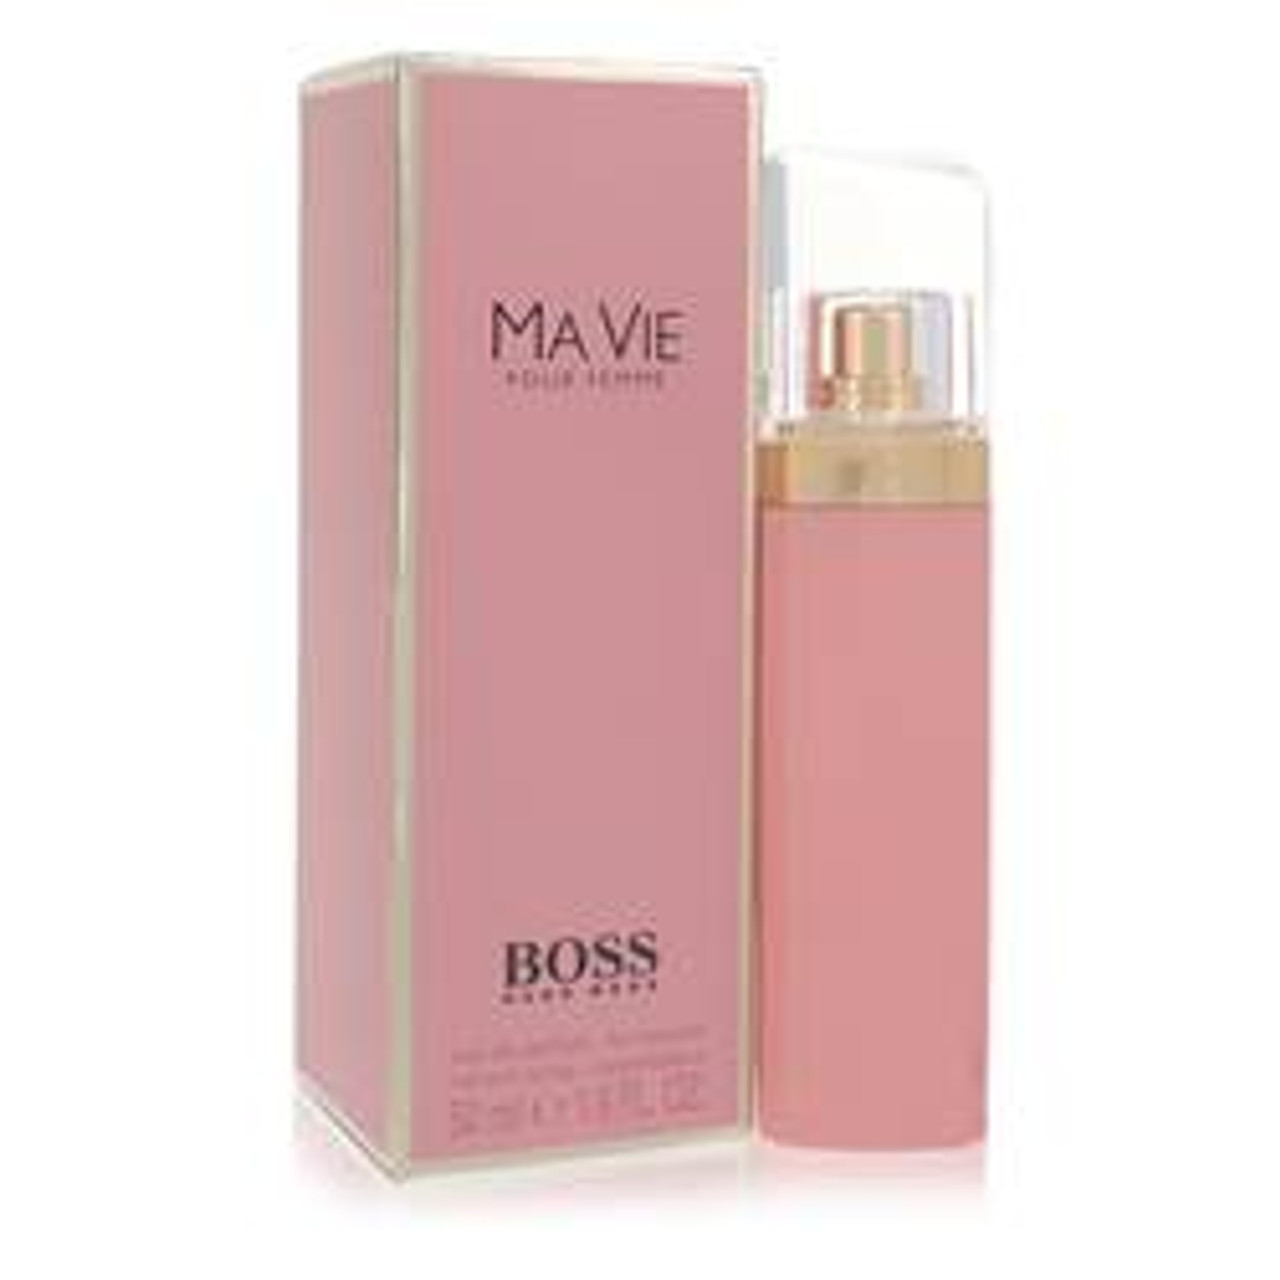 Boss Ma Vie Perfume By Hugo Boss Eau De Parfum Spray 1.6 oz for Women - [From 75.00 - Choose pk Qty ] - *Ships from Miami